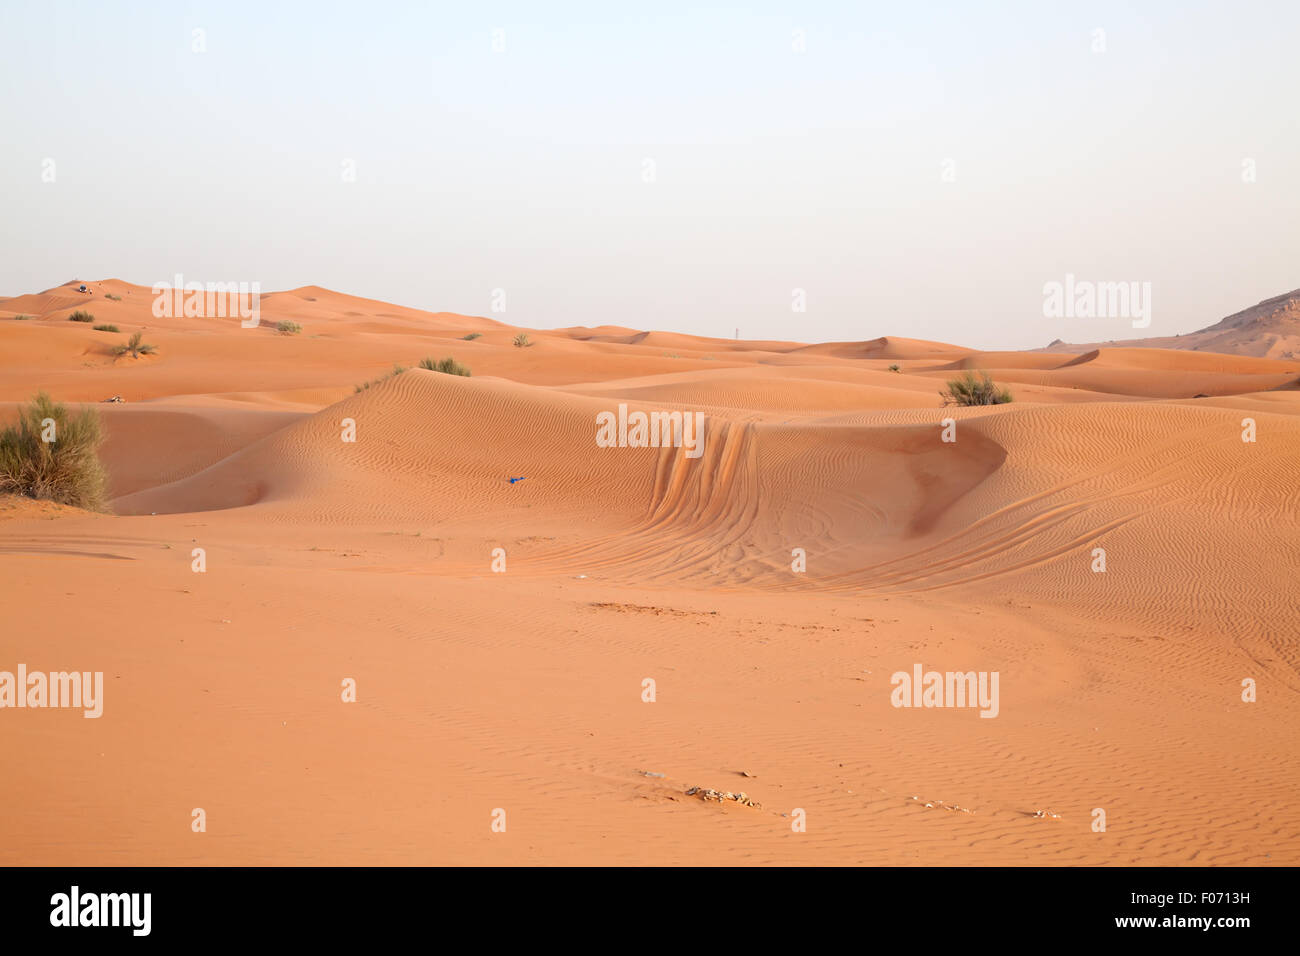 Red sand 'Arabian desert' near Dubai, United Arab Emirates Stock Photo